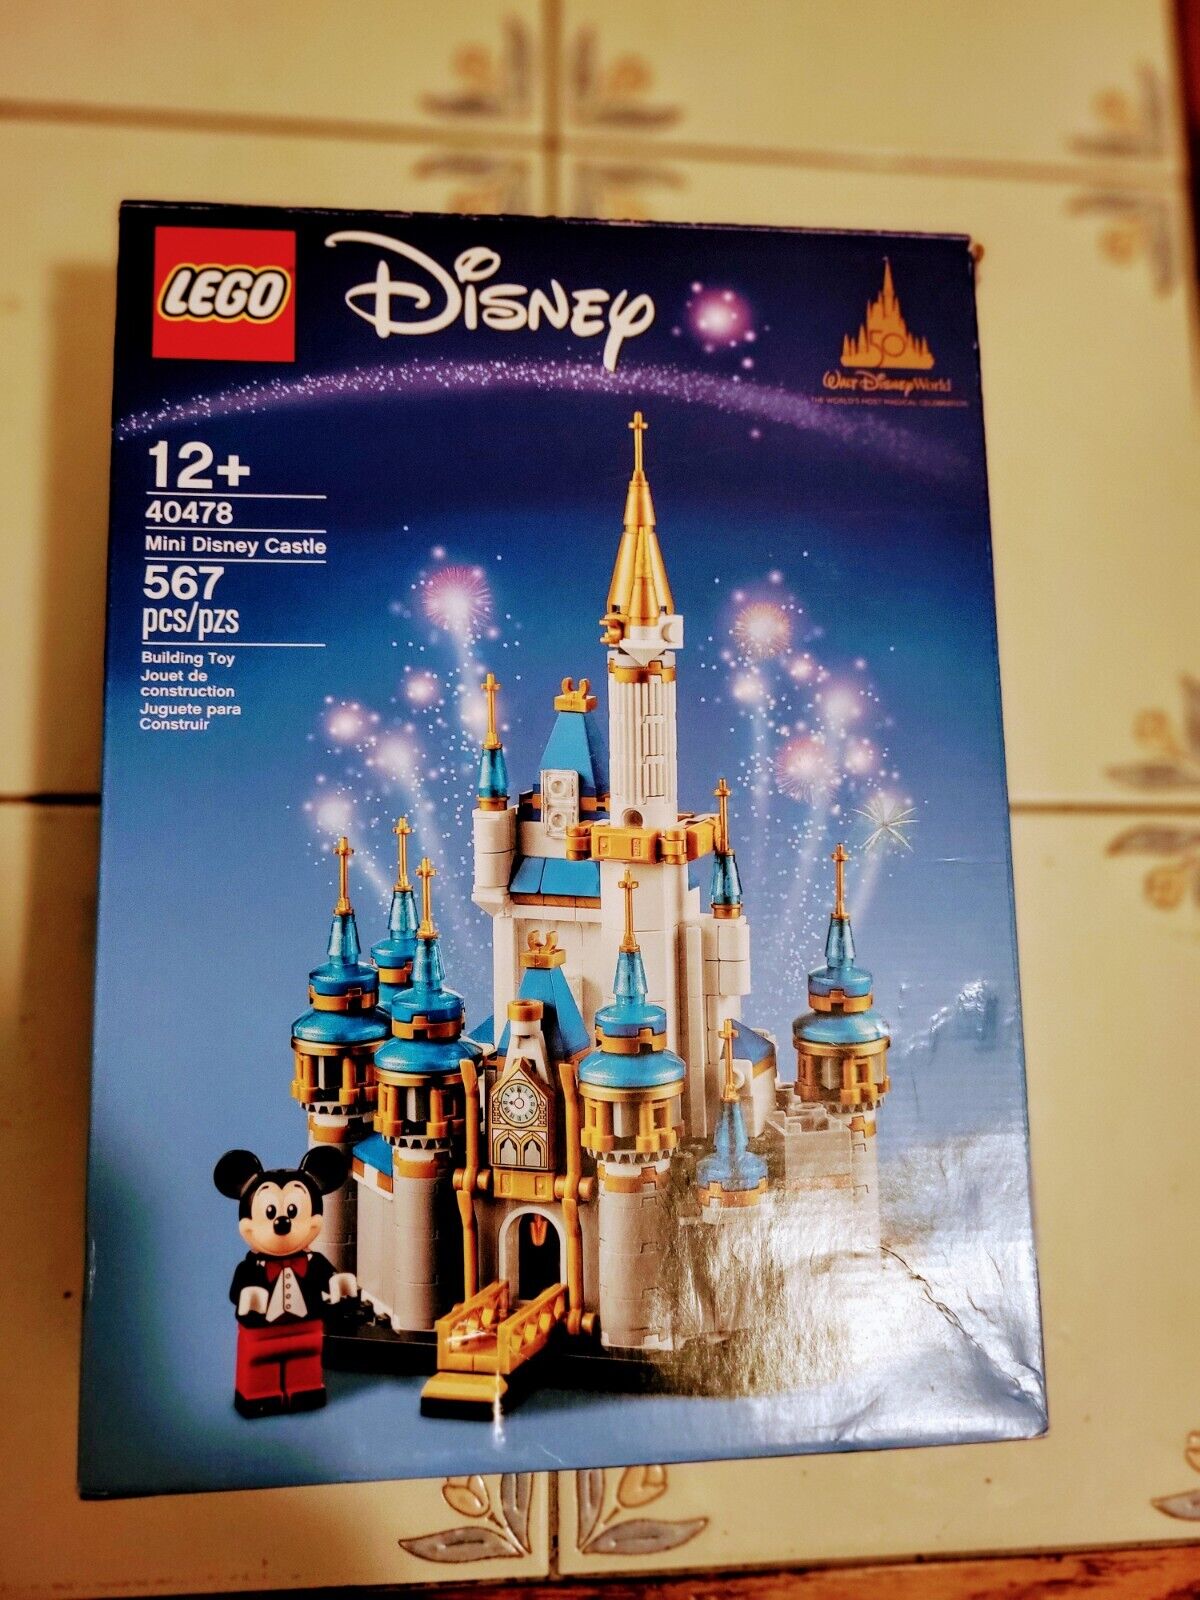 LEGO Disney: Mini Disney Castle (40478)